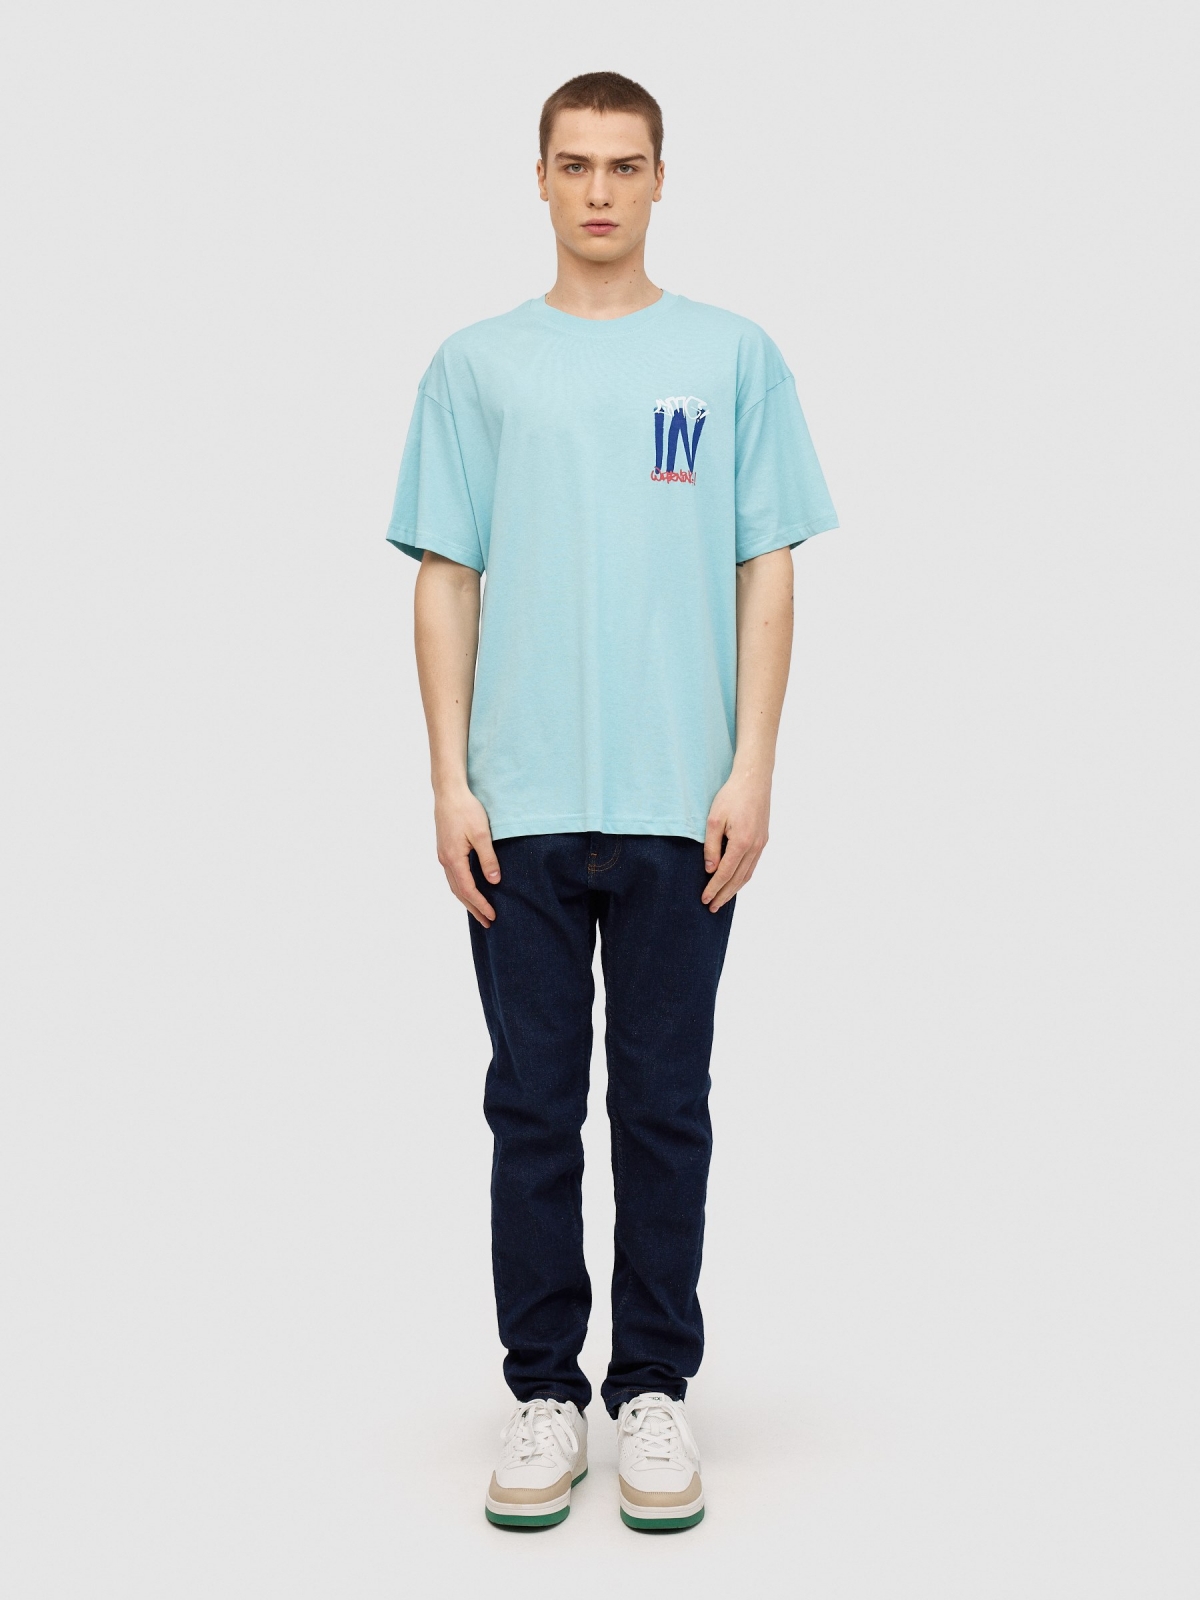 T-shirt com logótipo de graffiti azul claro vista geral frontal